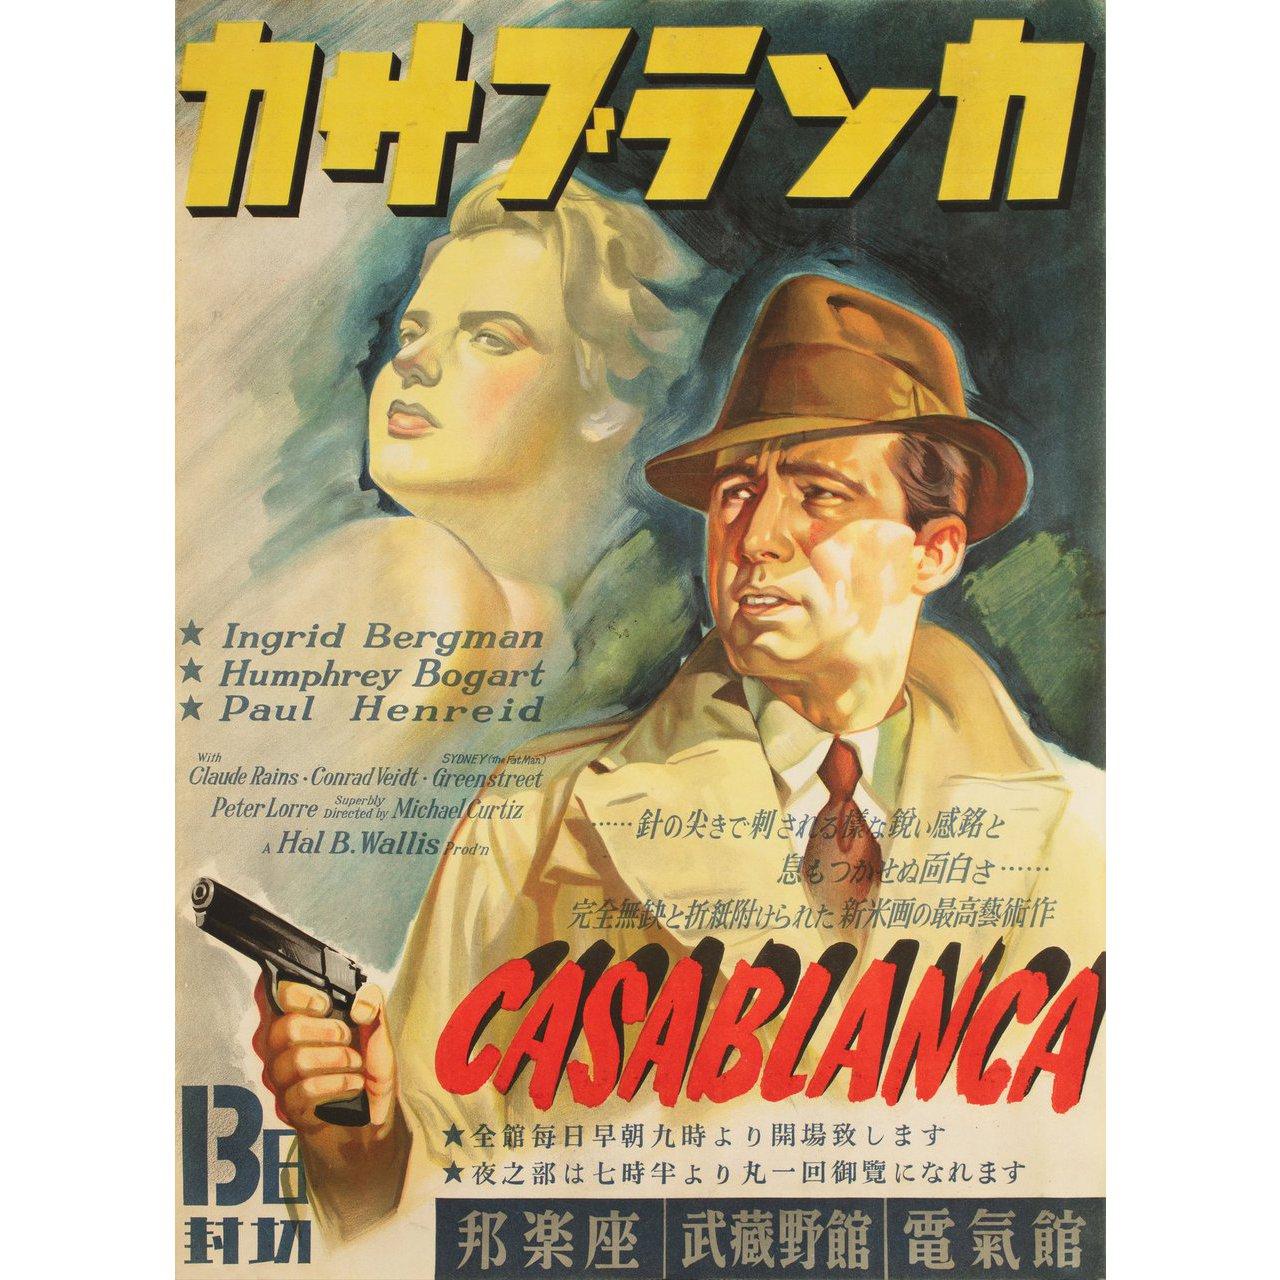 Mid-20th Century Casablanca 1946 Japanese B3 Film Poster